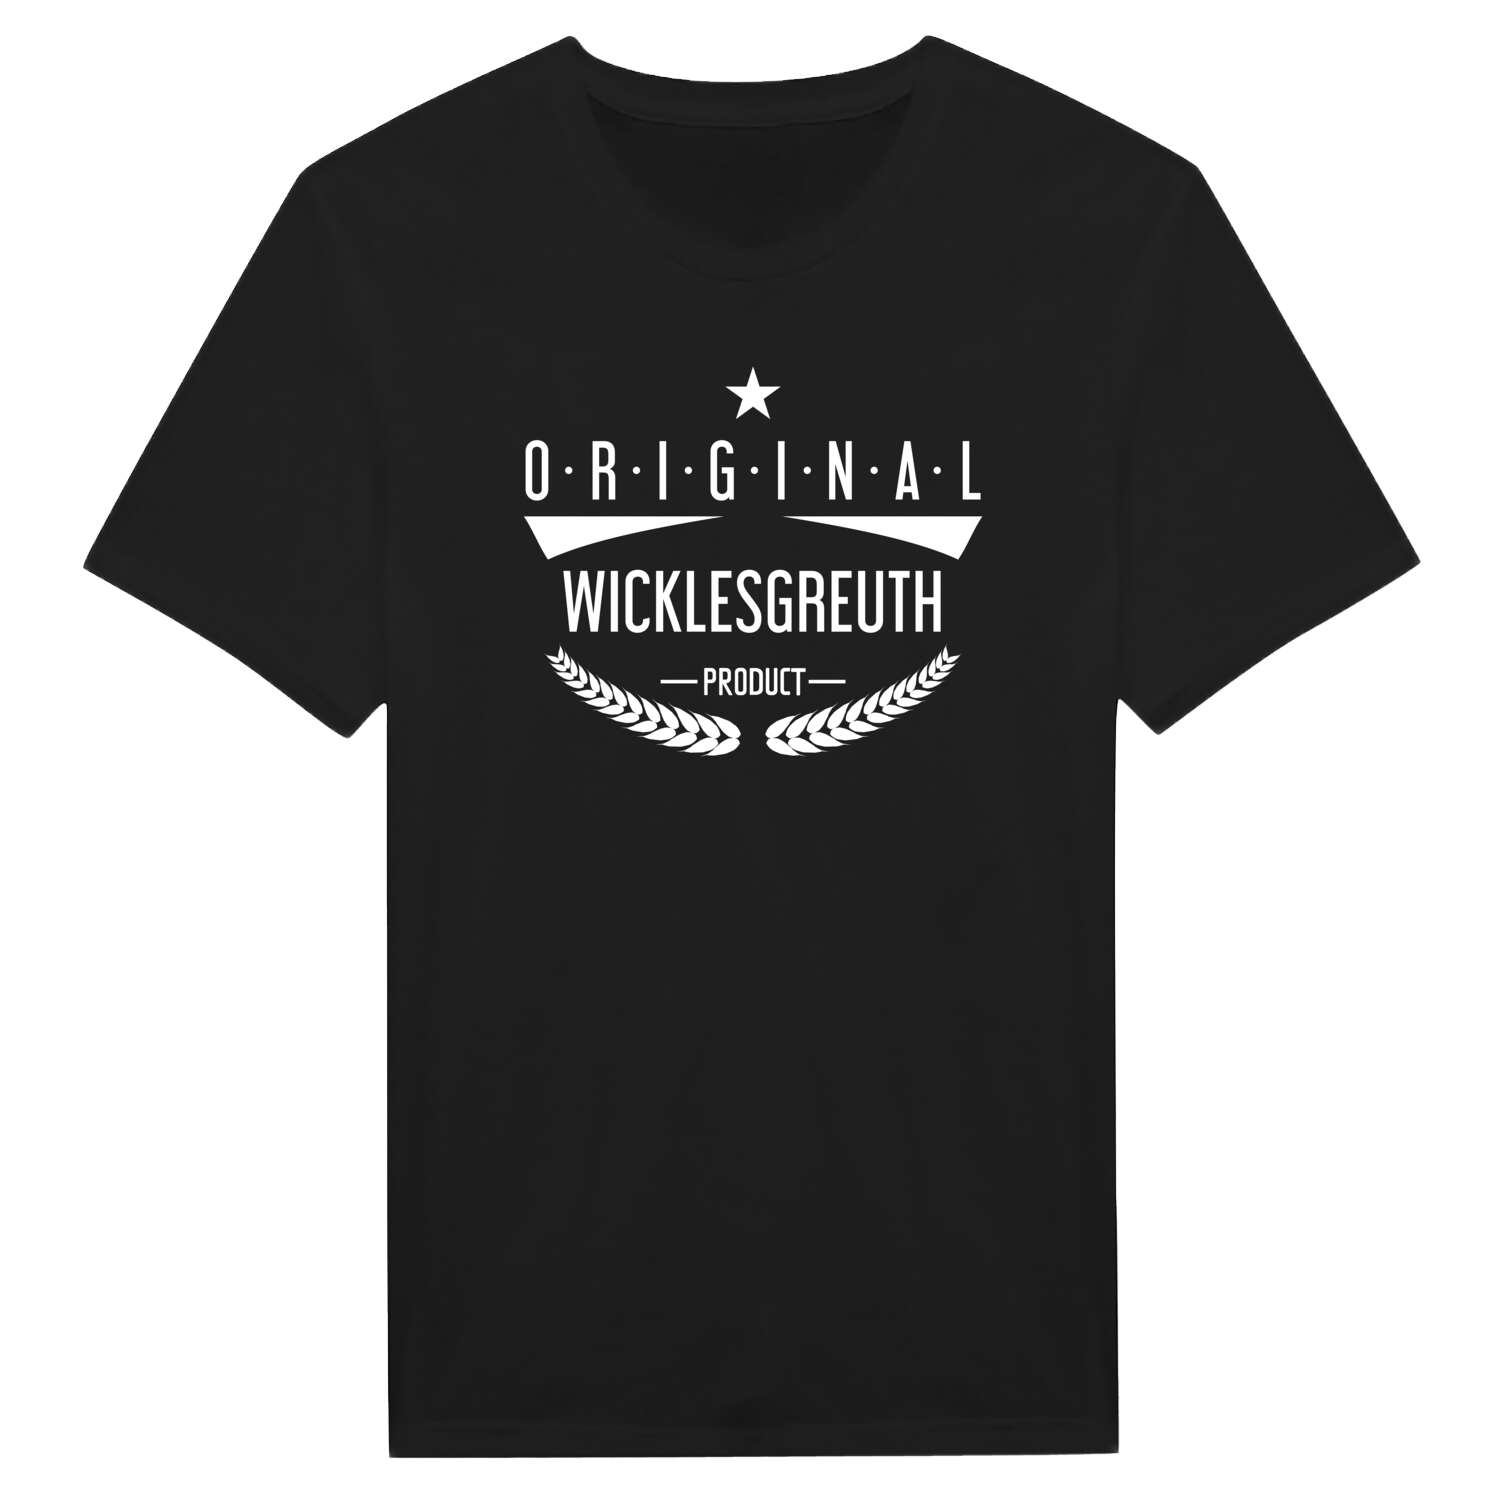 Wicklesgreuth T-Shirt »Original Product«